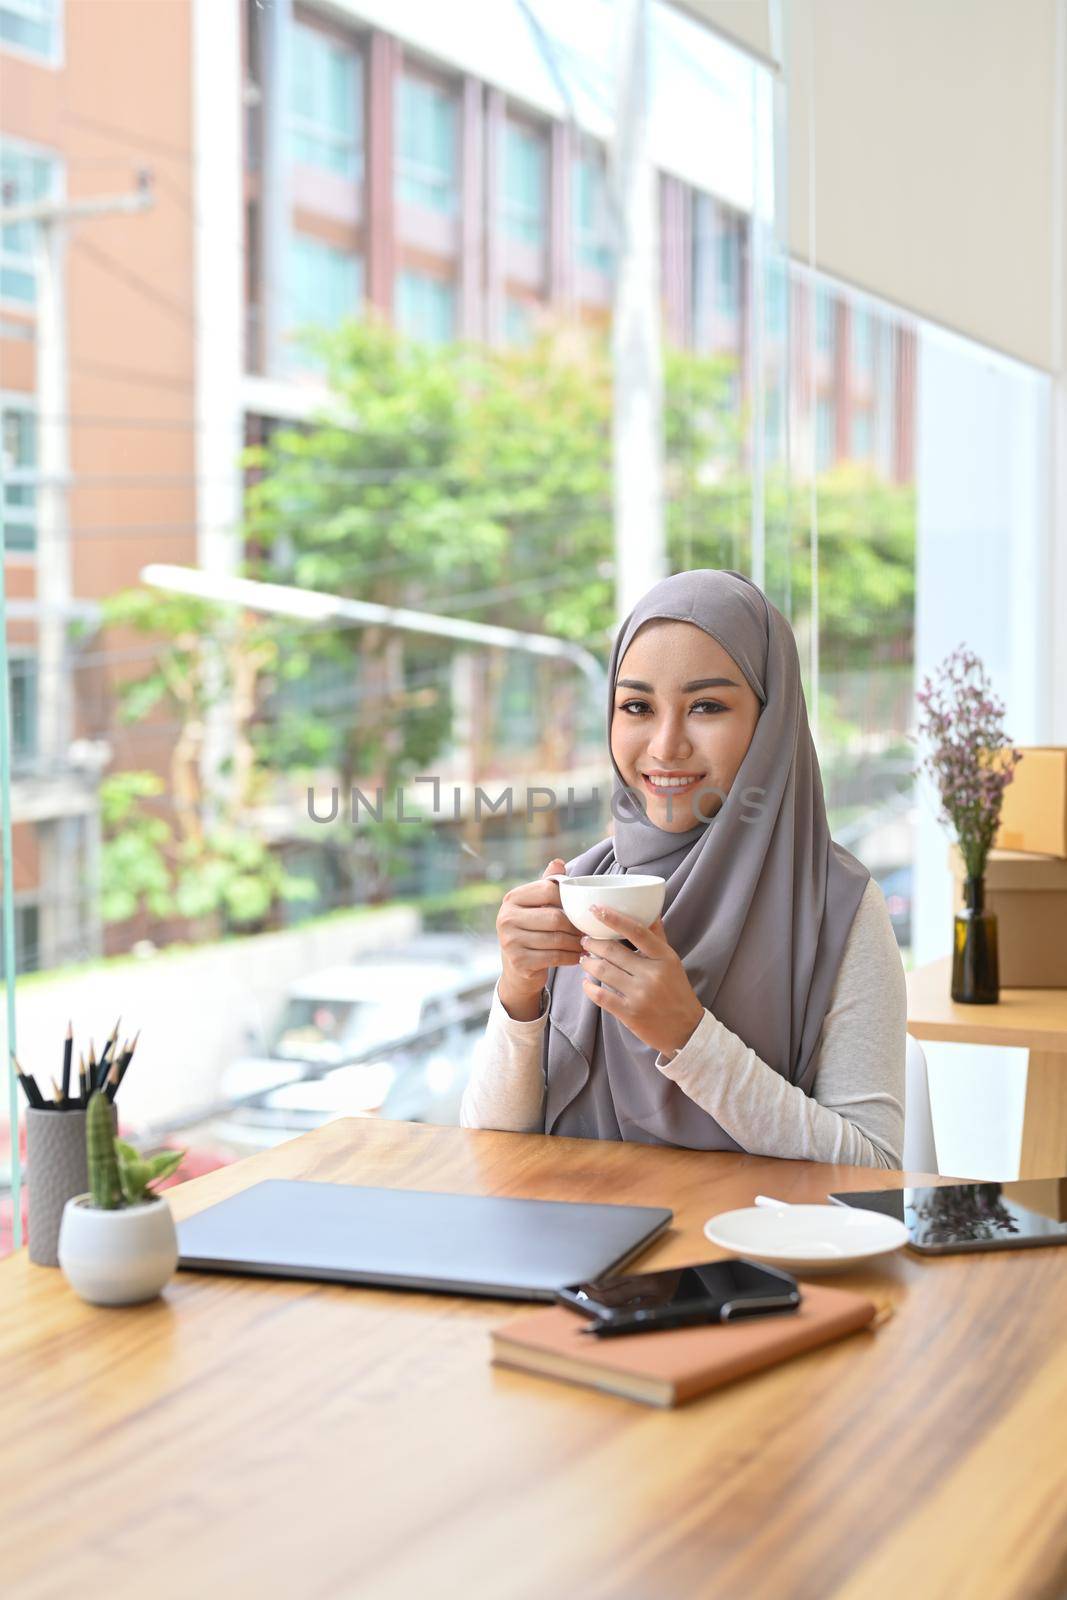 Smiling muslim businesswoman in hijab sitting in her office and enjoying morning coffee by prathanchorruangsak